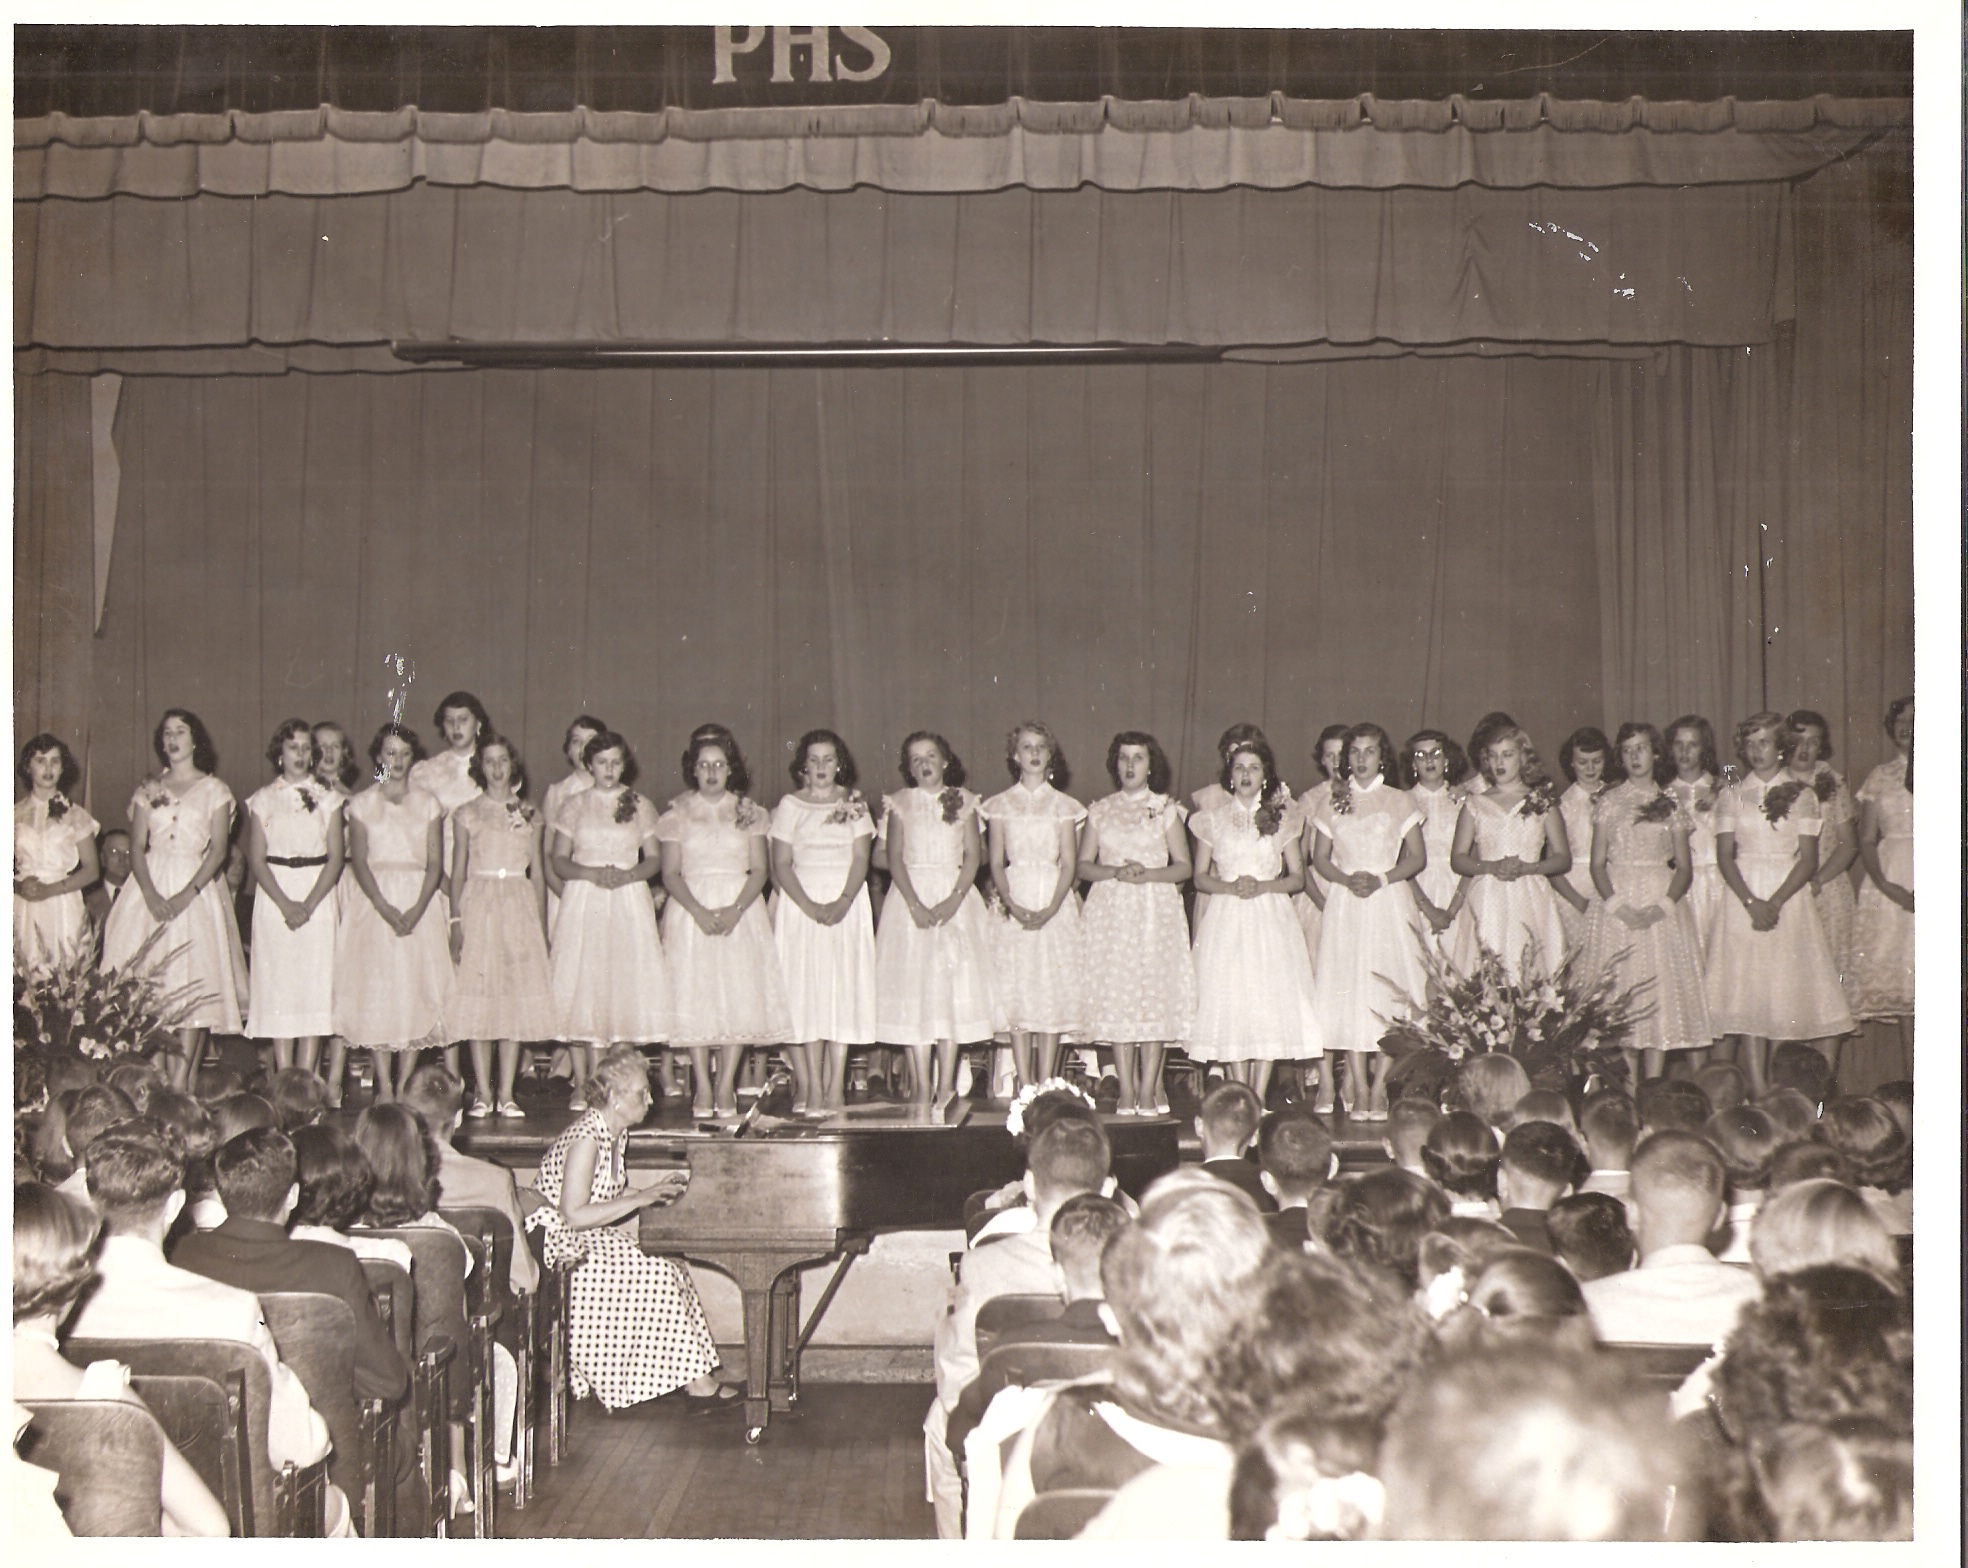 PUTNAM JR. HIGH GIRLS' CHORUS MEMBERS SING AT 9TH GRADE GRADUATION - MAY 1954.  MOVITA STEVENS CONTRIBUTED THESE PHOTOS: JANET McGRAW,BARBARA POLAN,FRAN DANSBY,SQUEEK STEELE,BEDDOE,GINNY RANKIN,JANIE MAY,MOVITA STEVENS,ARLENE CLENDENEN,GRETCHEN WUERDEMAN,